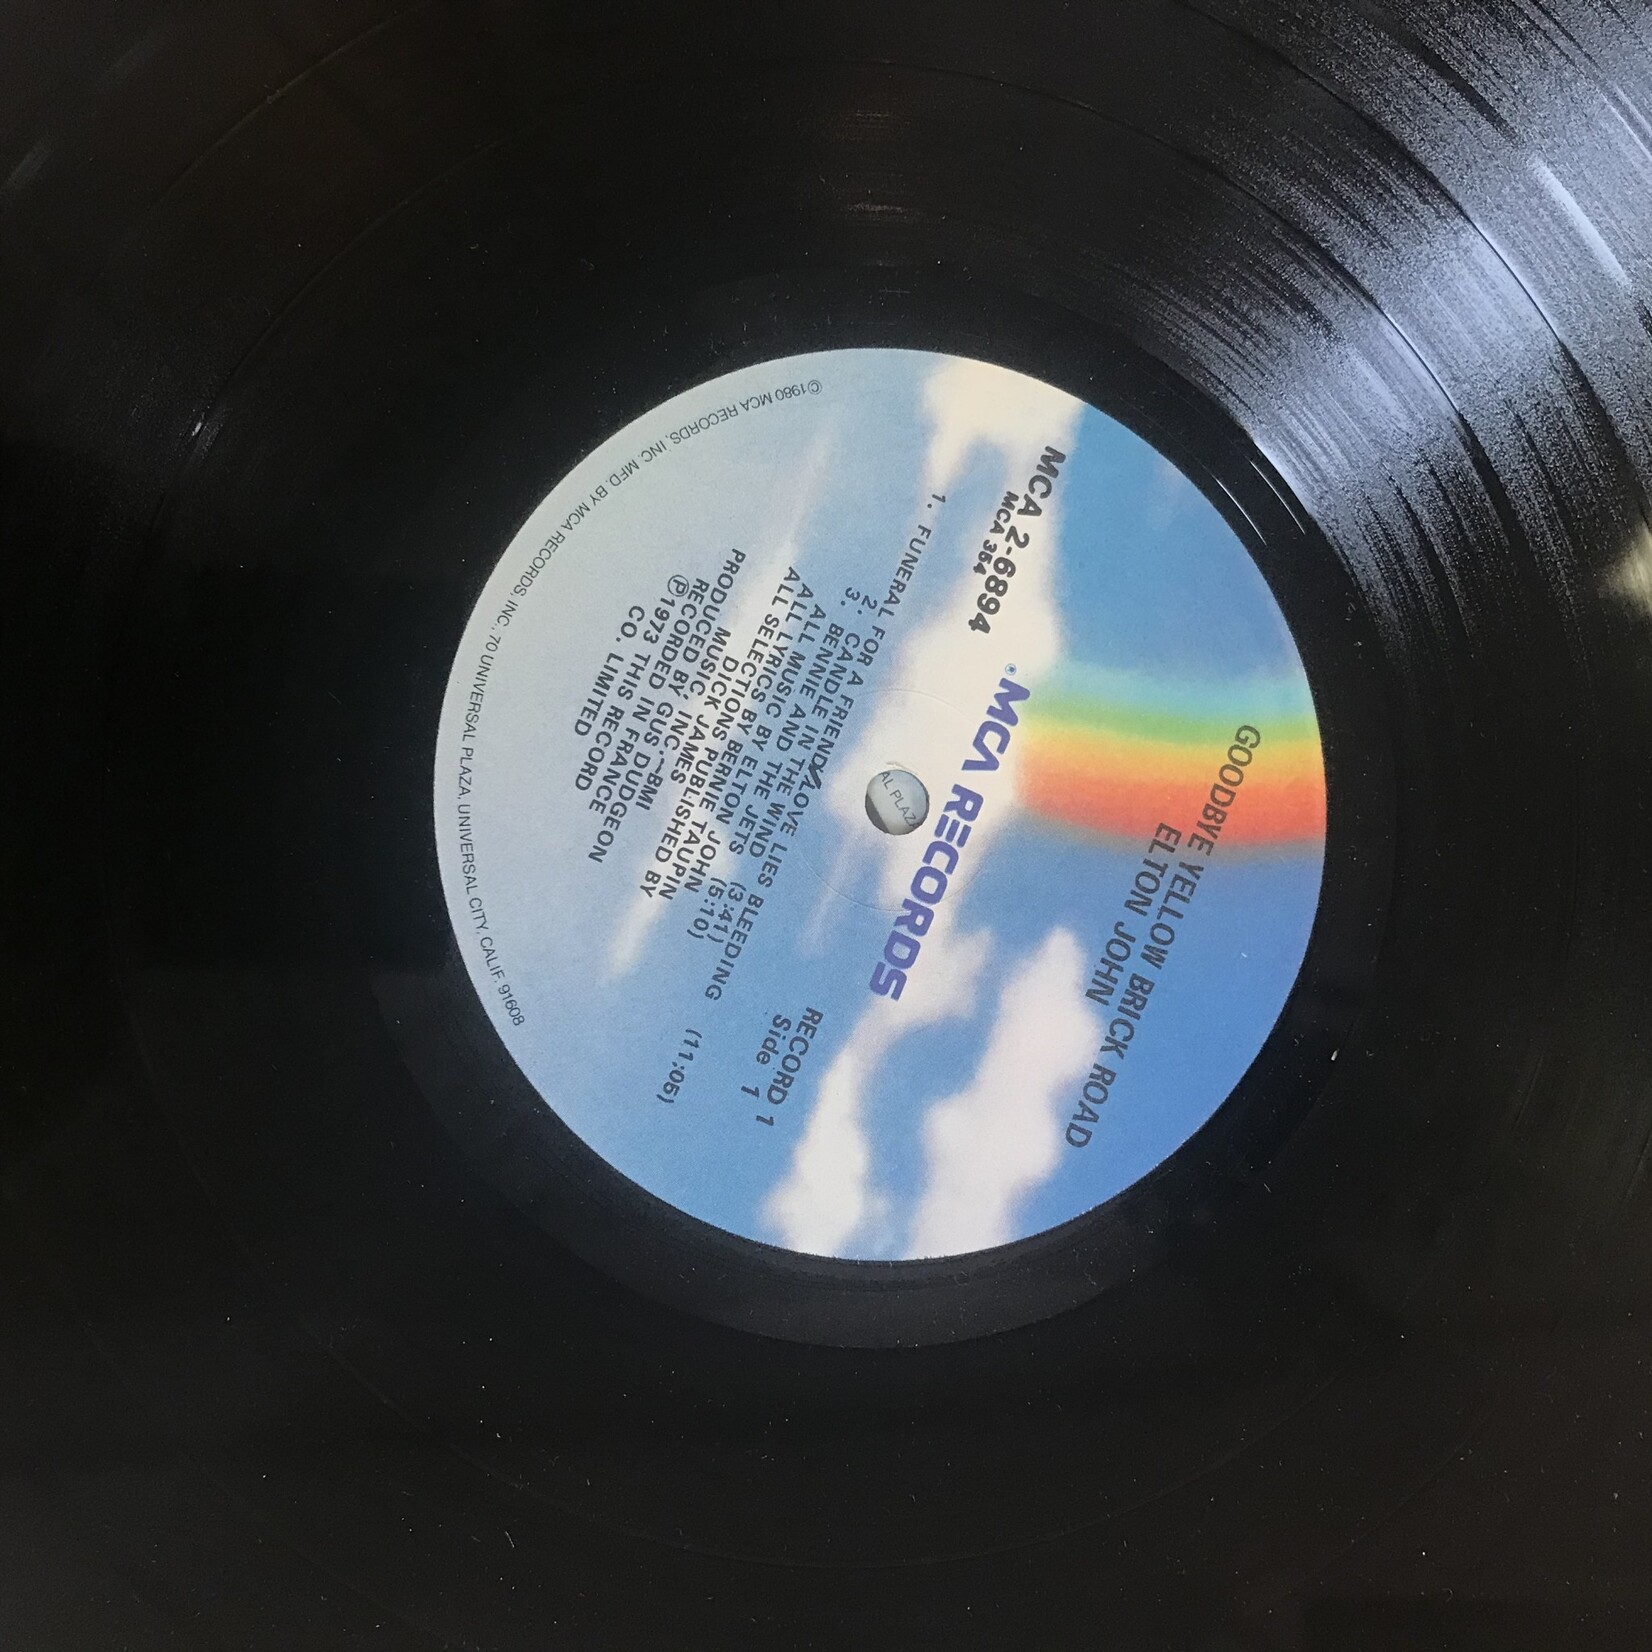 Elton John - Goodbye Yellow Brick Road (Specially Priced Two Record Set) - MCA2 6894 - Vinyl LP (USED)